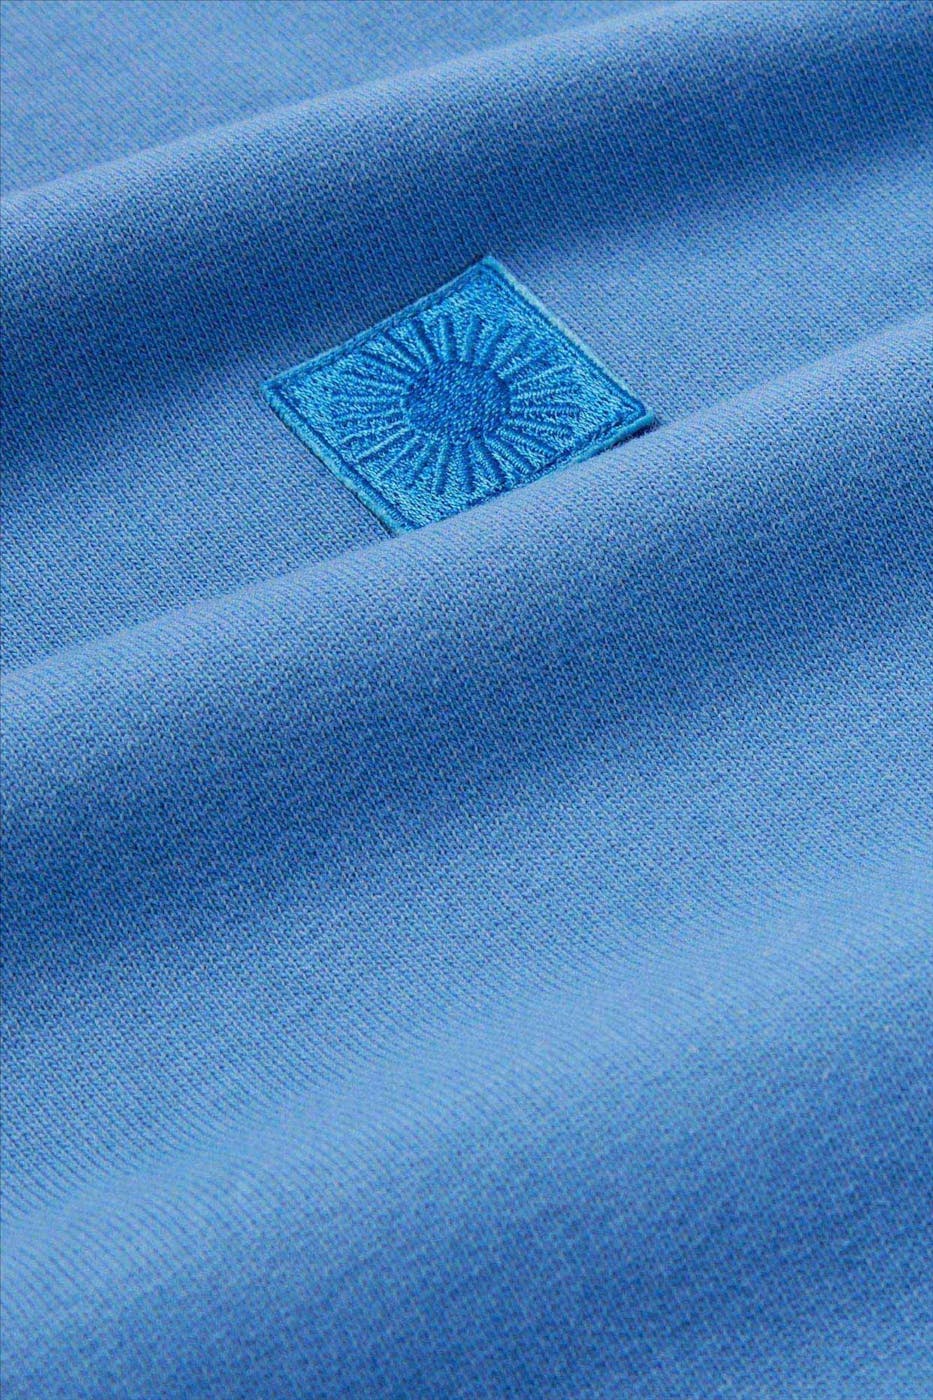 Thinking Mu - Lichtblauwe Soleil sweatshirt